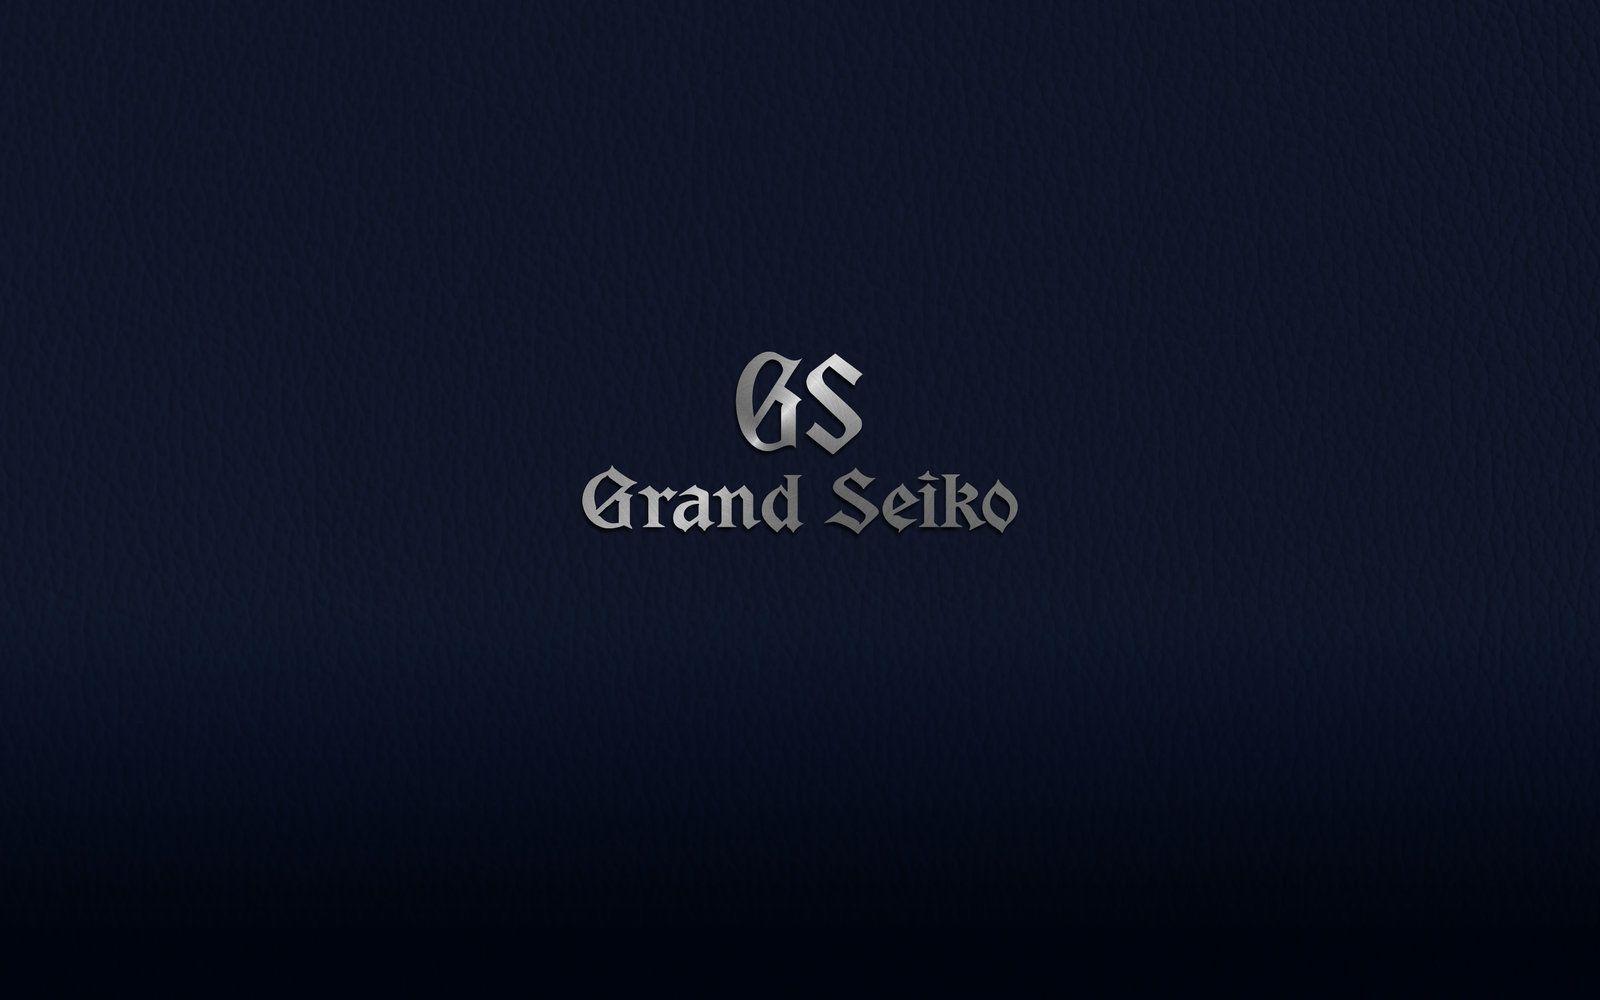 Grand Seiko Wallpapers - Wallpaper Cave